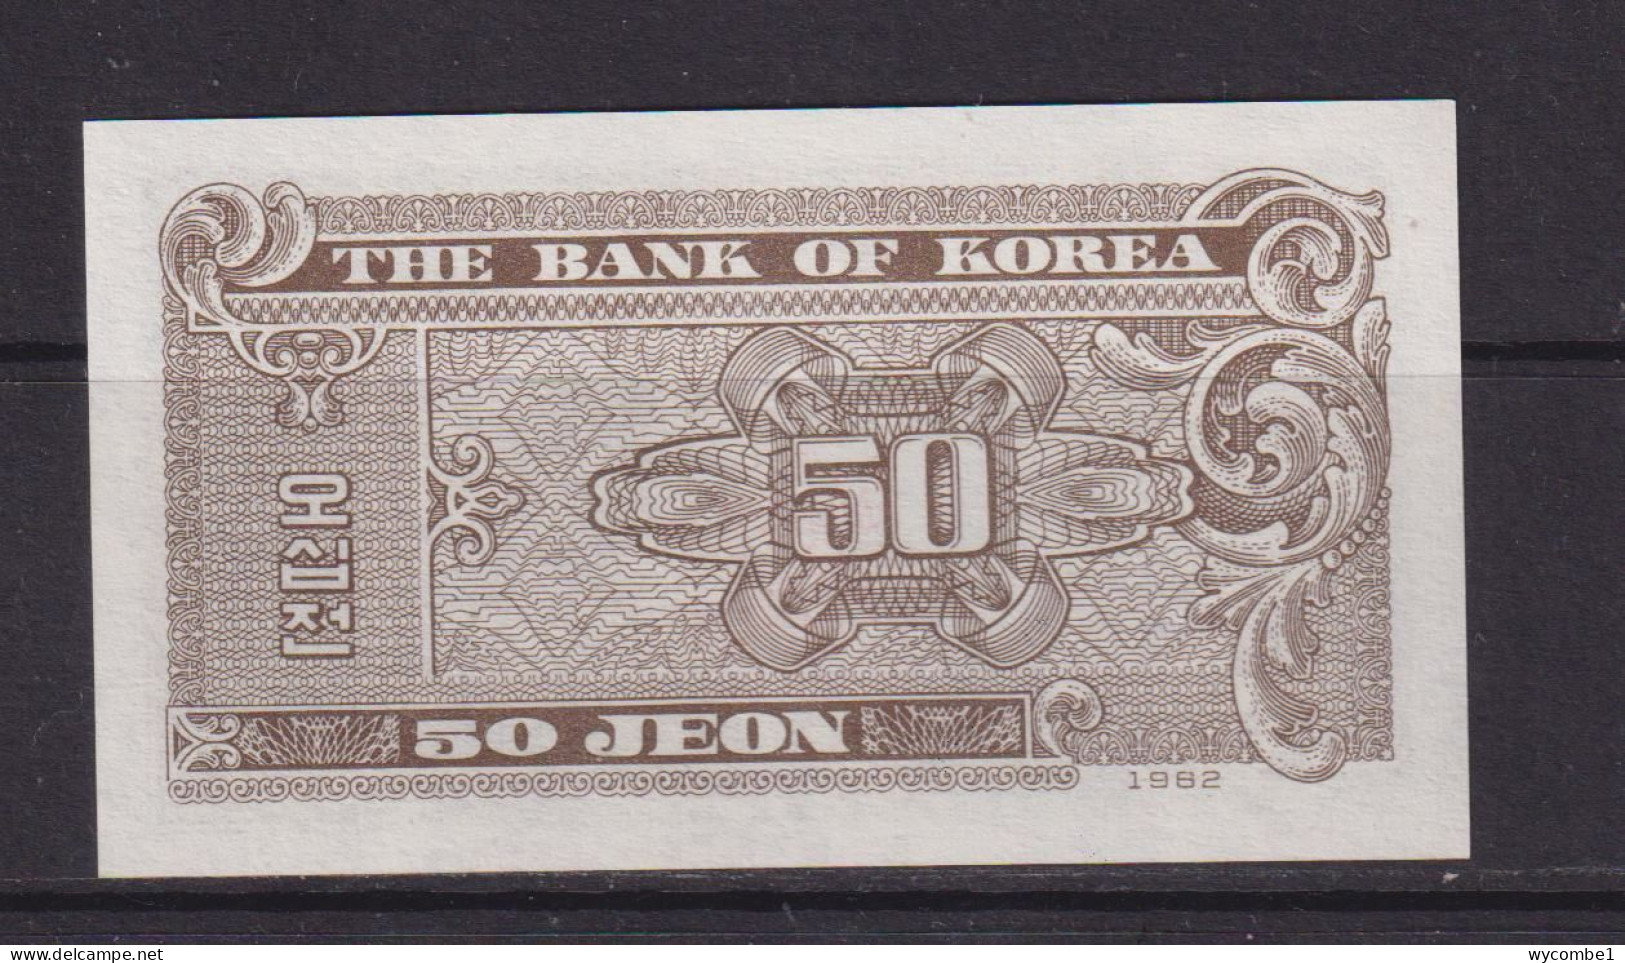 SOUTH KOREA - 1962 50 Jeon UNC/aUNC Banknote - Korea, South